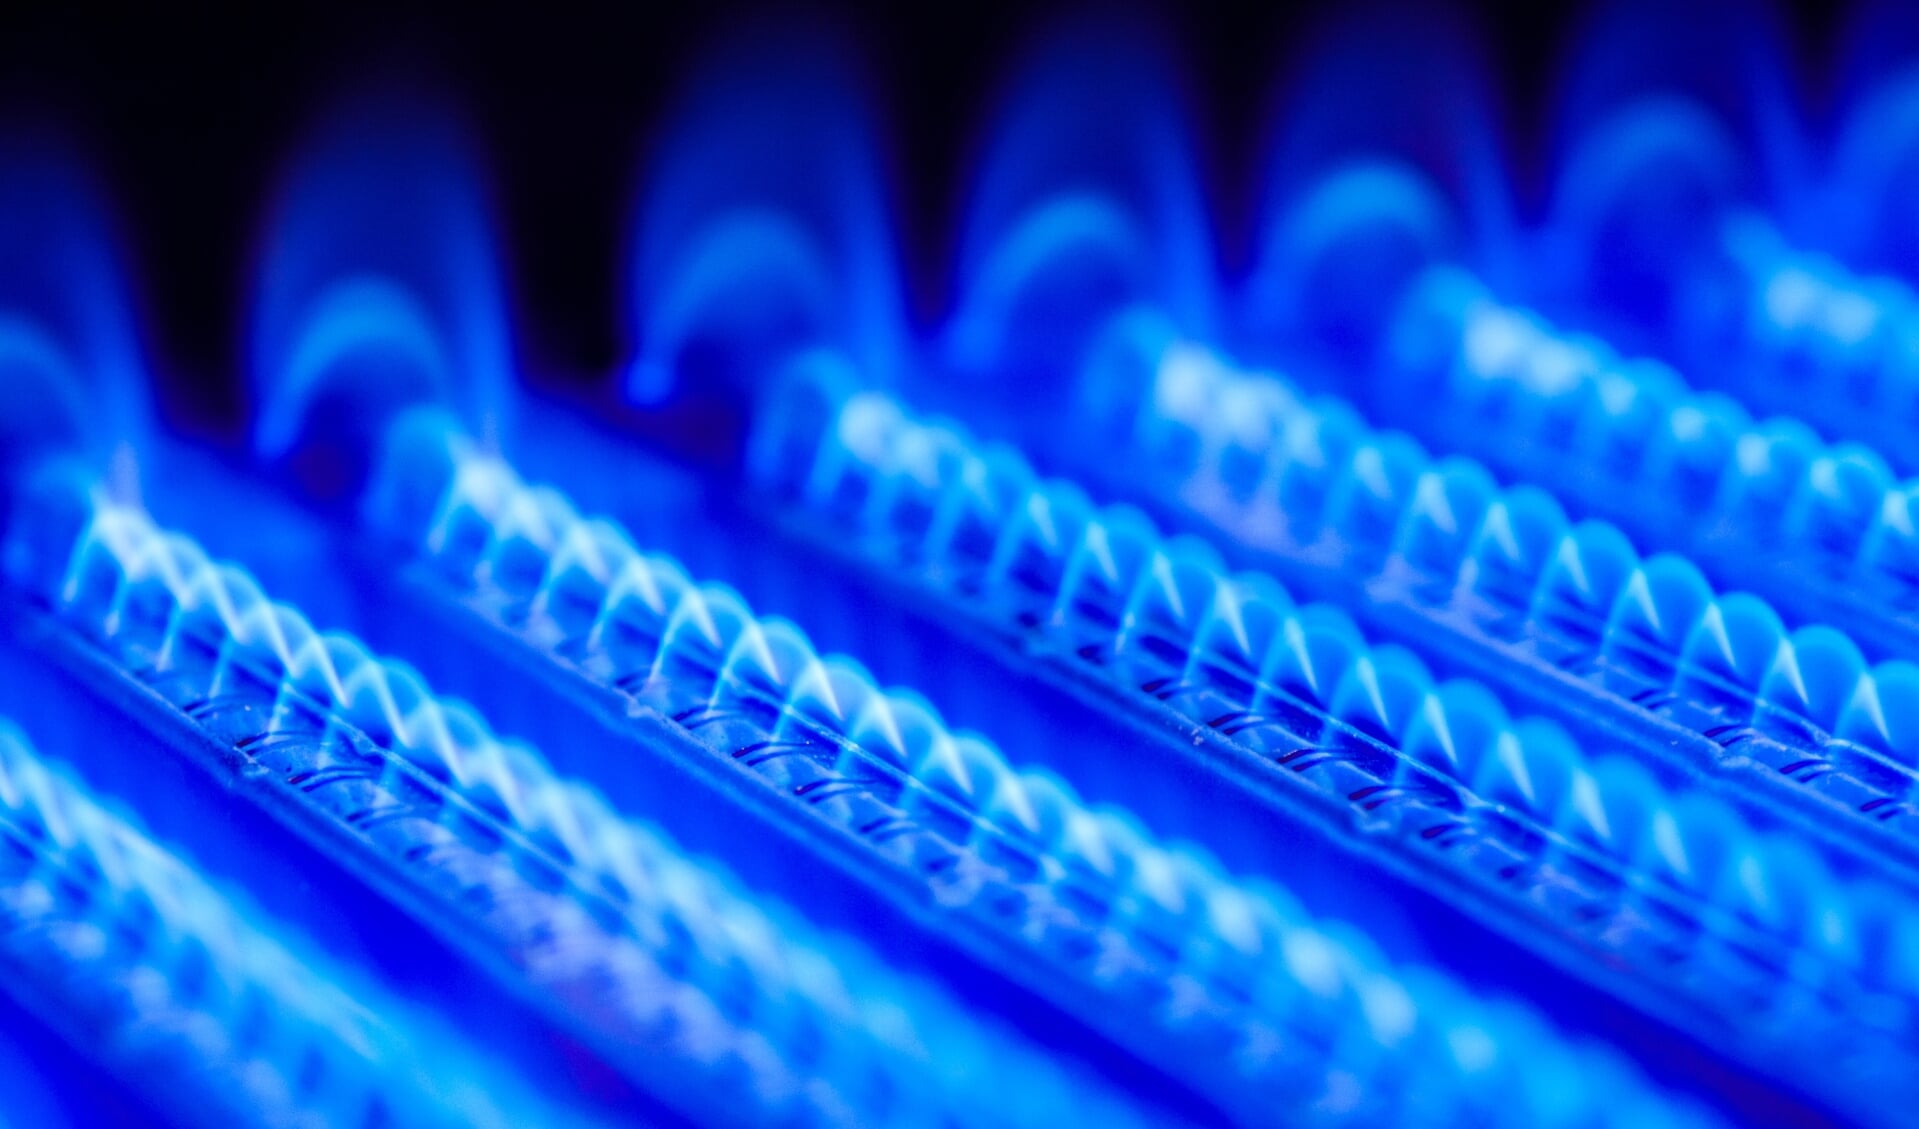 Propane flame inside of gas boiler furnace